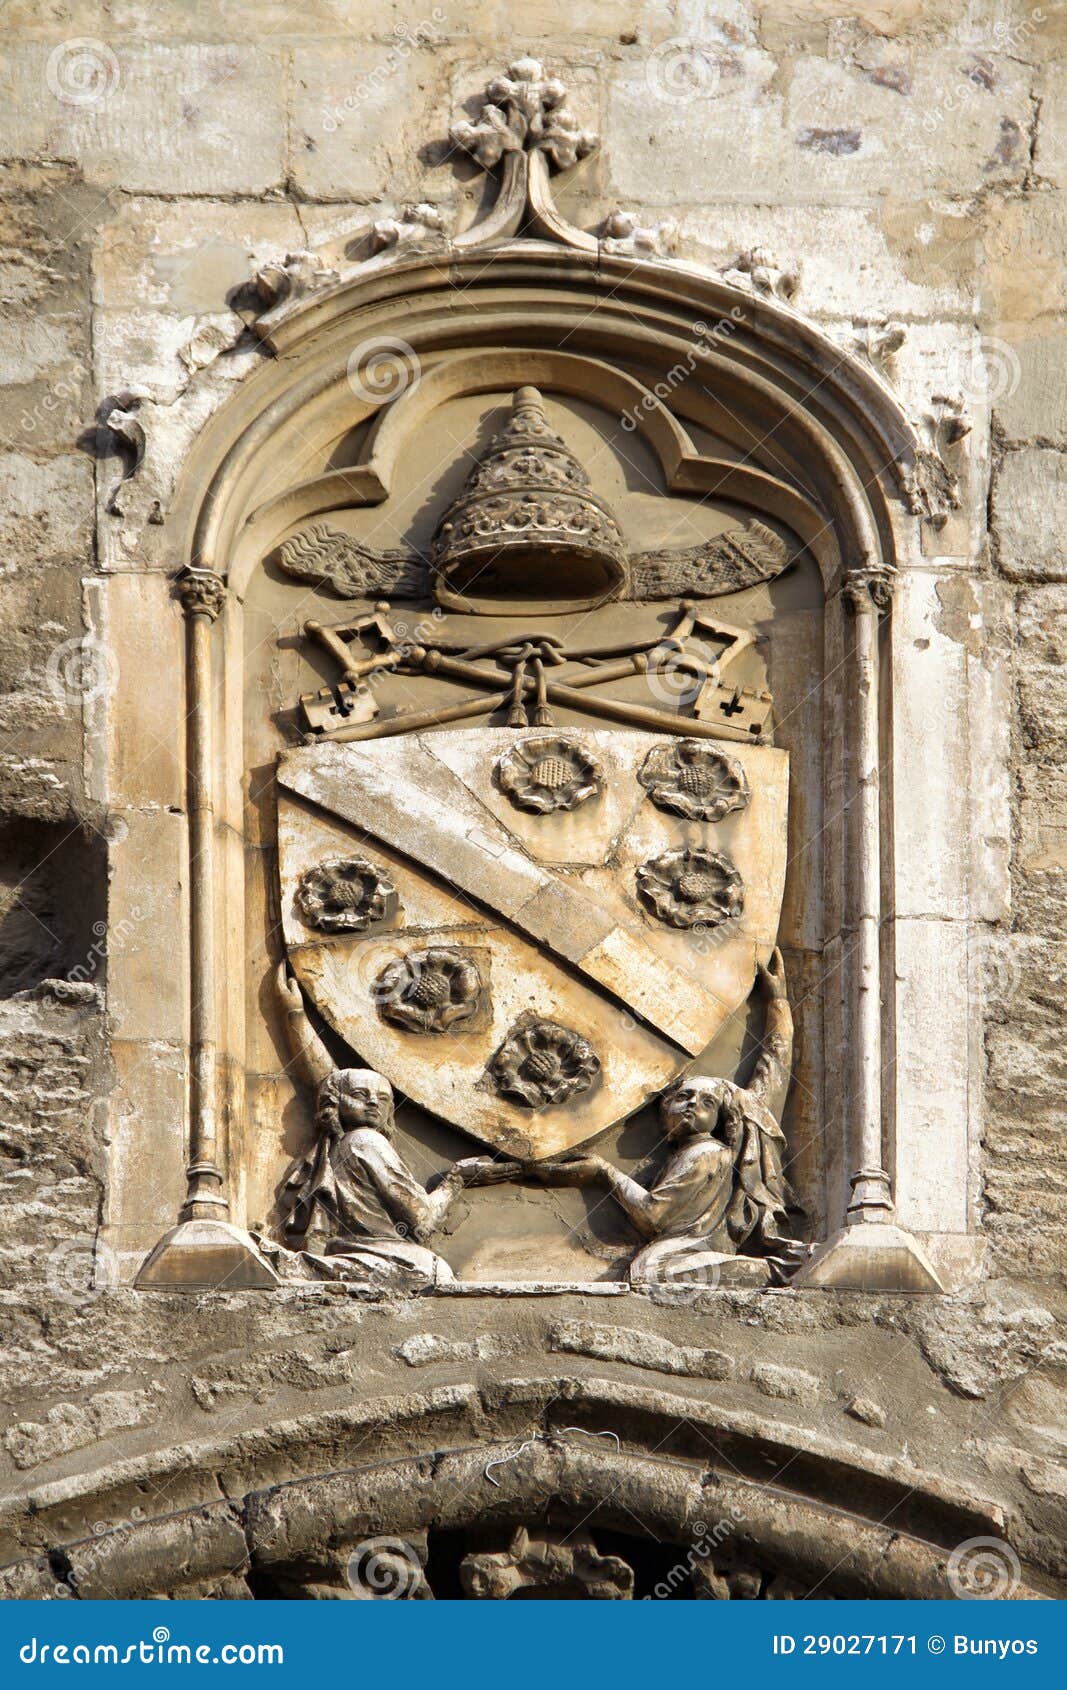 papal emblem at the popes palace, avignon, france